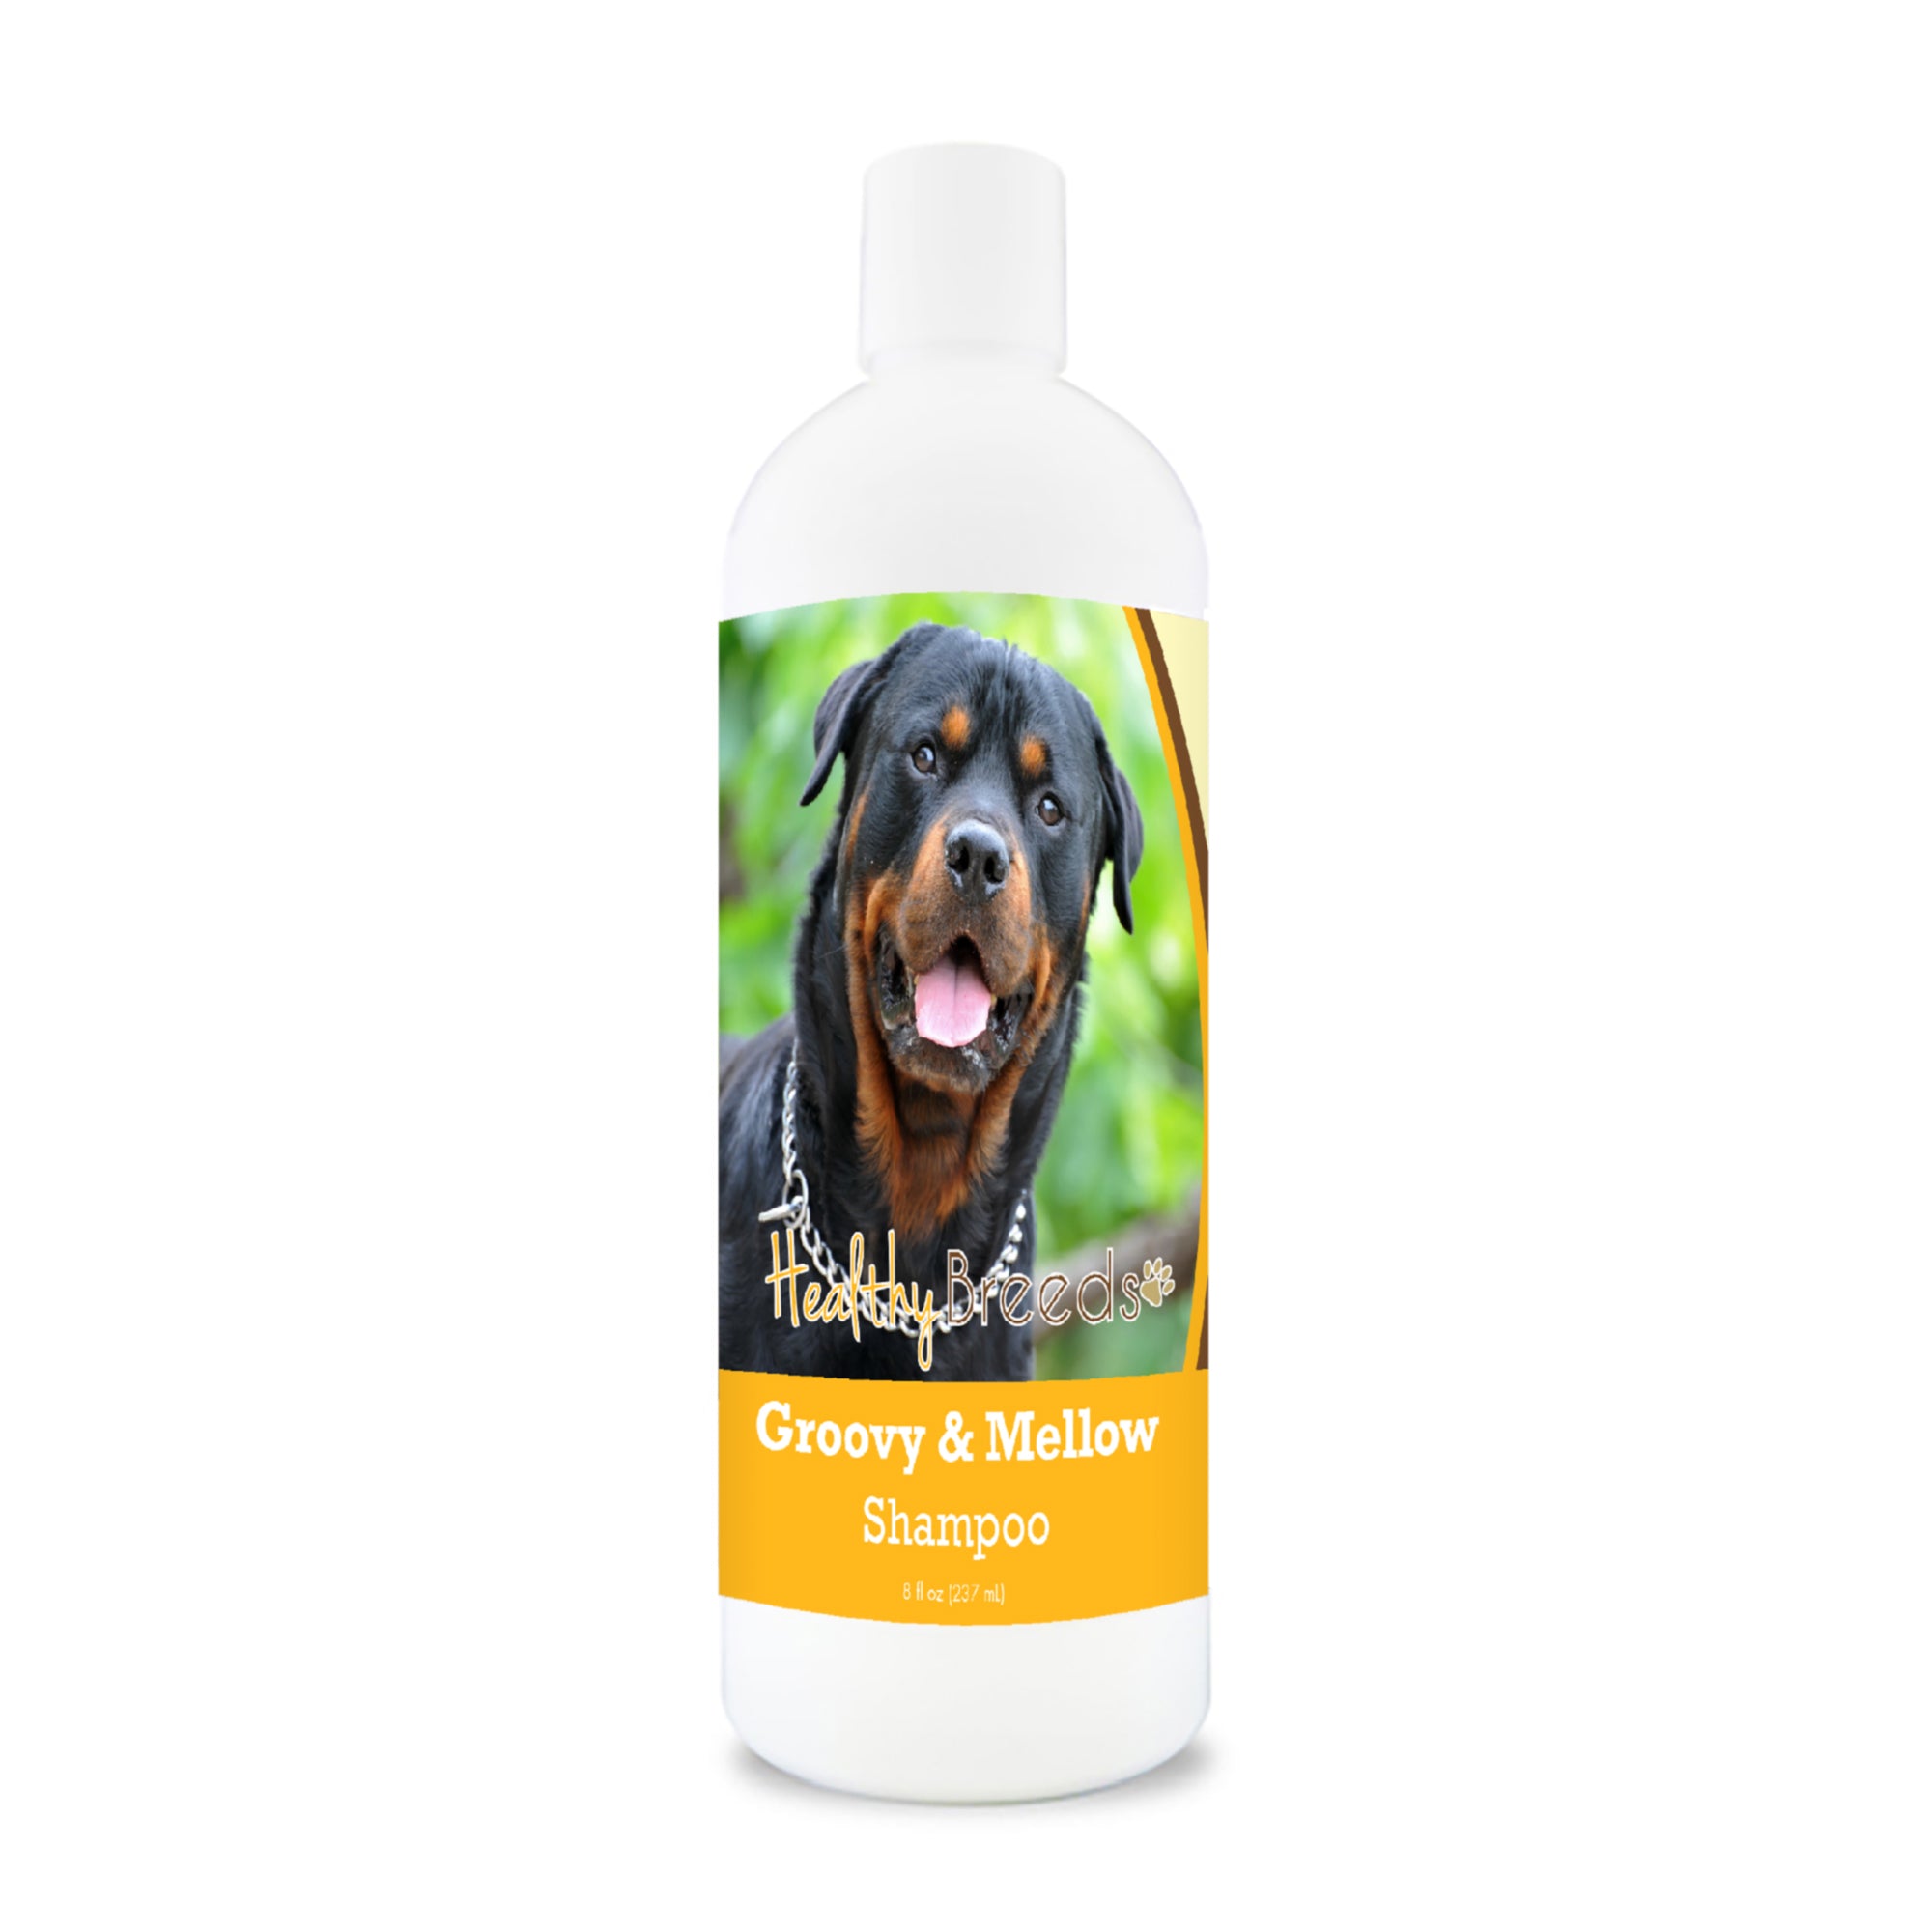 Rottweiler Groovy & Mellow Shampoo 8 oz